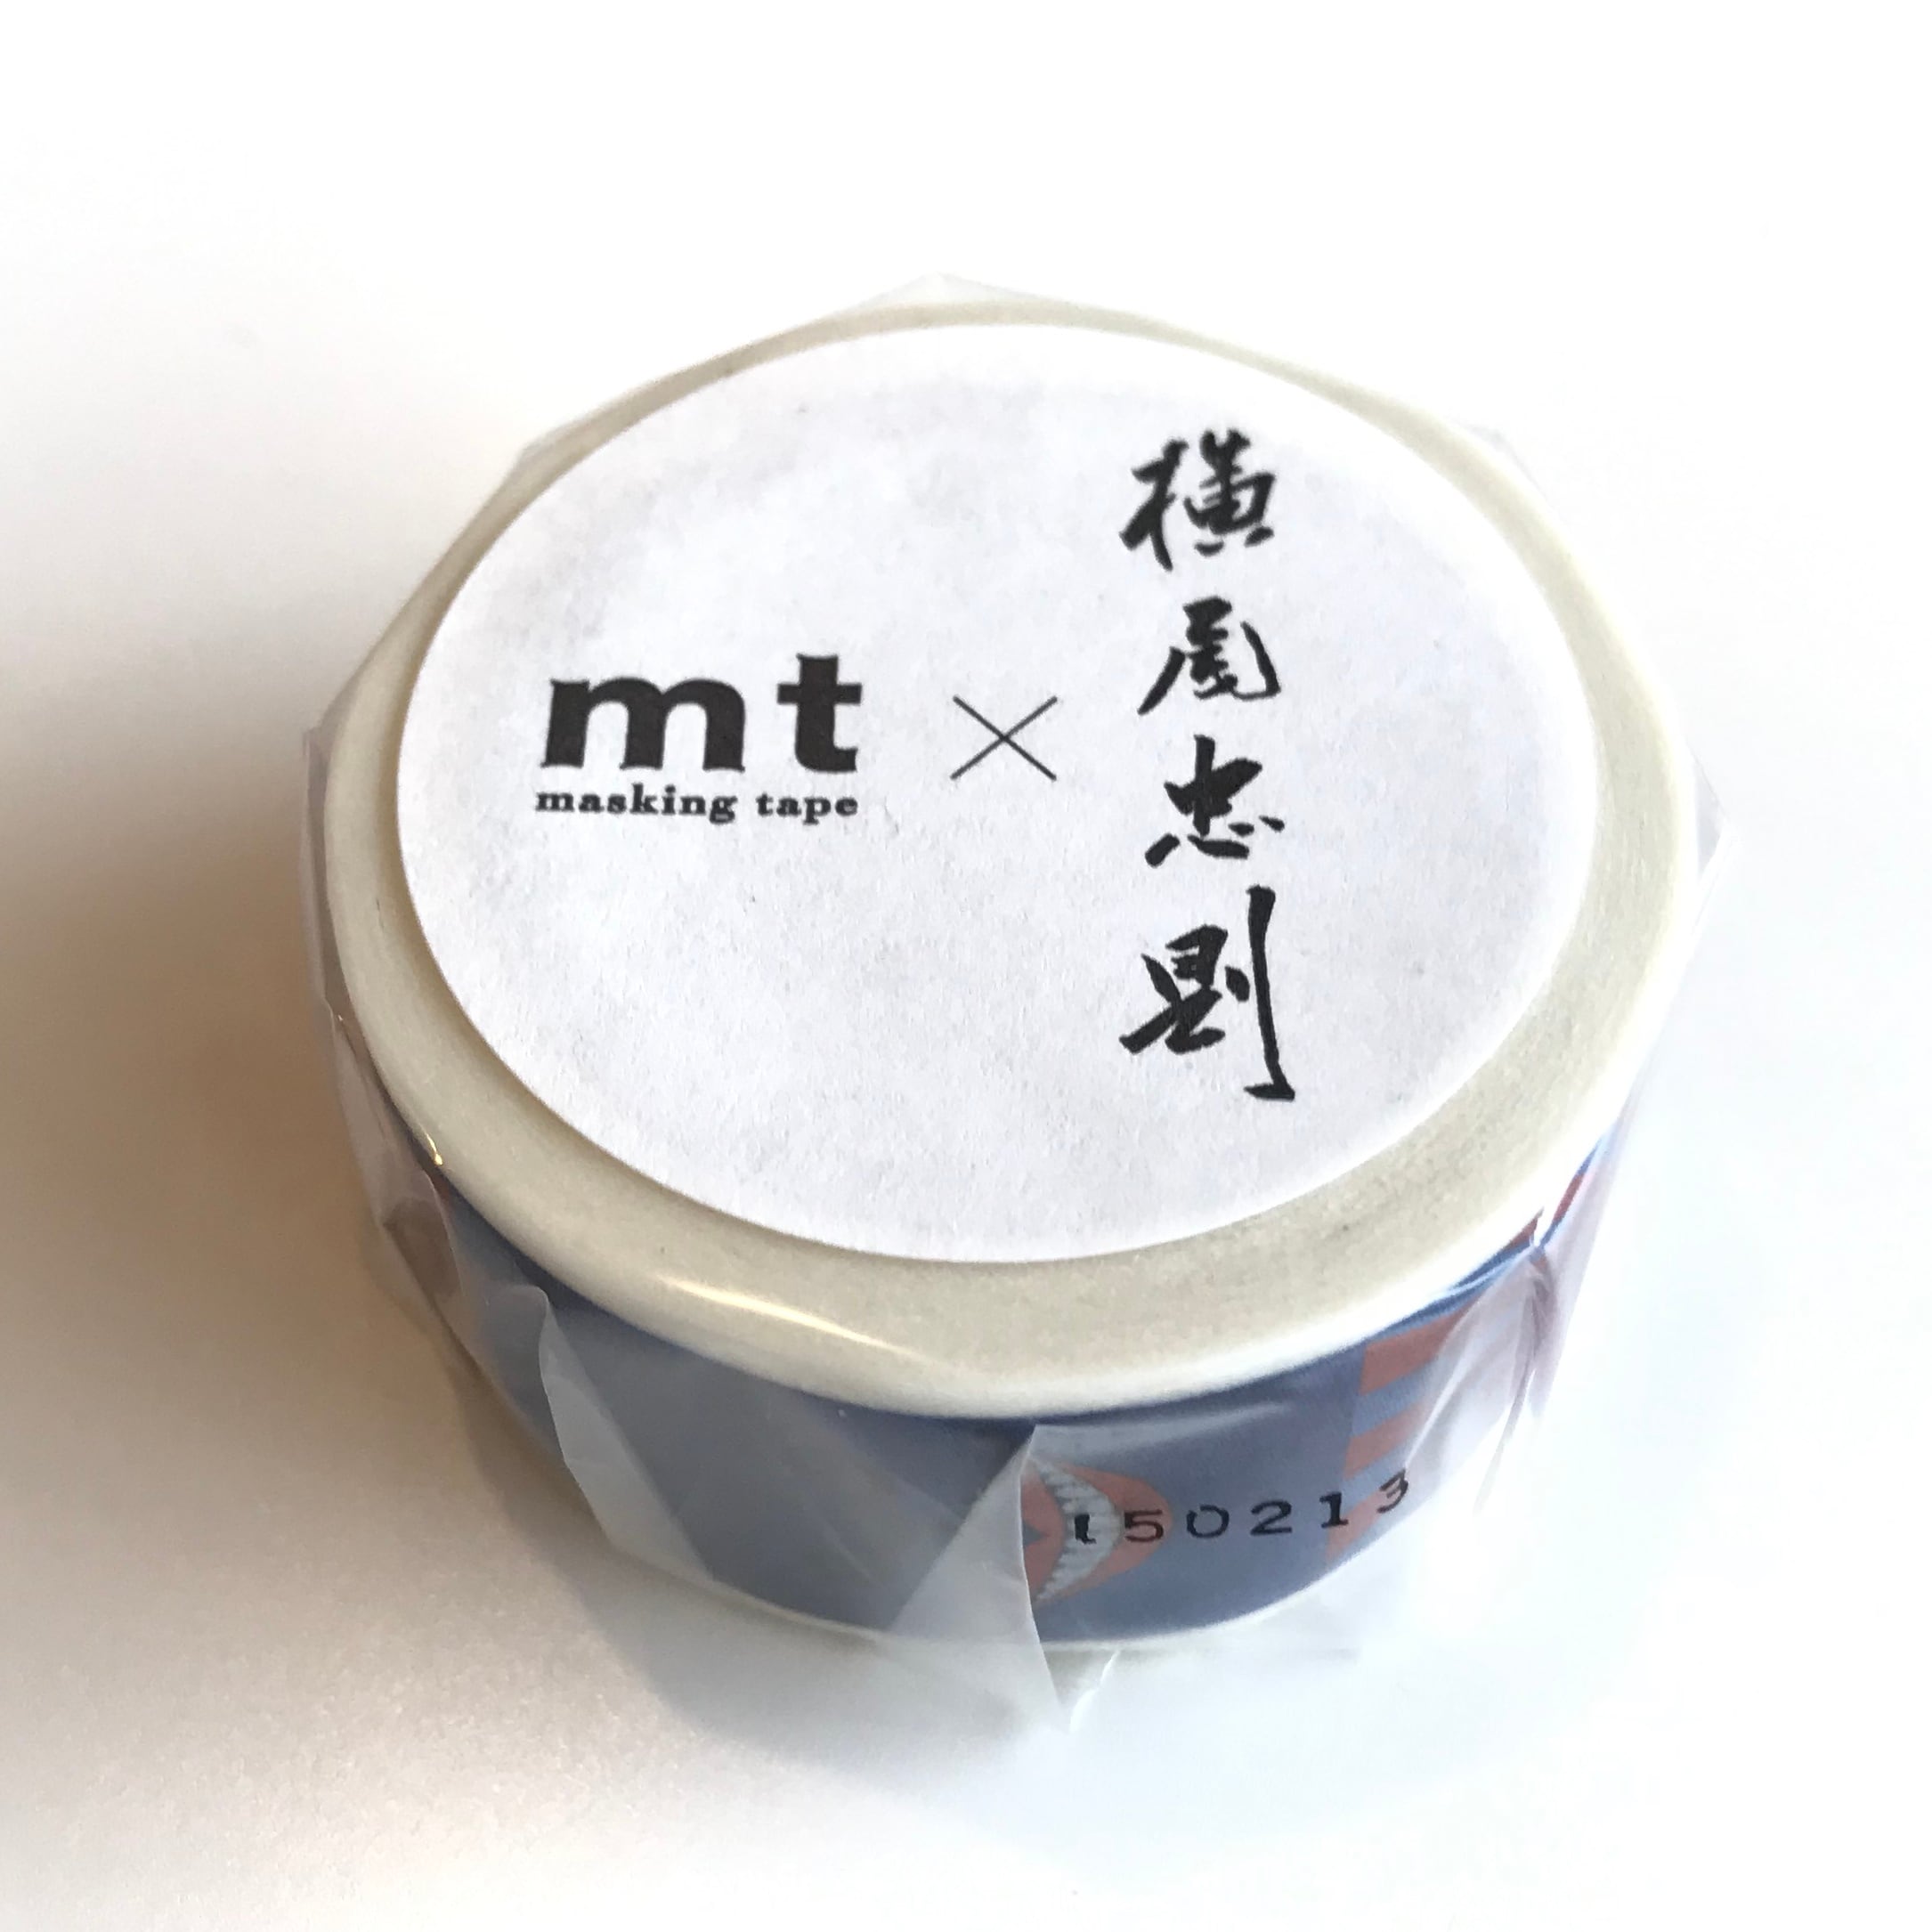 mt マスキングテープ 横尾忠則 / eye and mouth | Macaroni